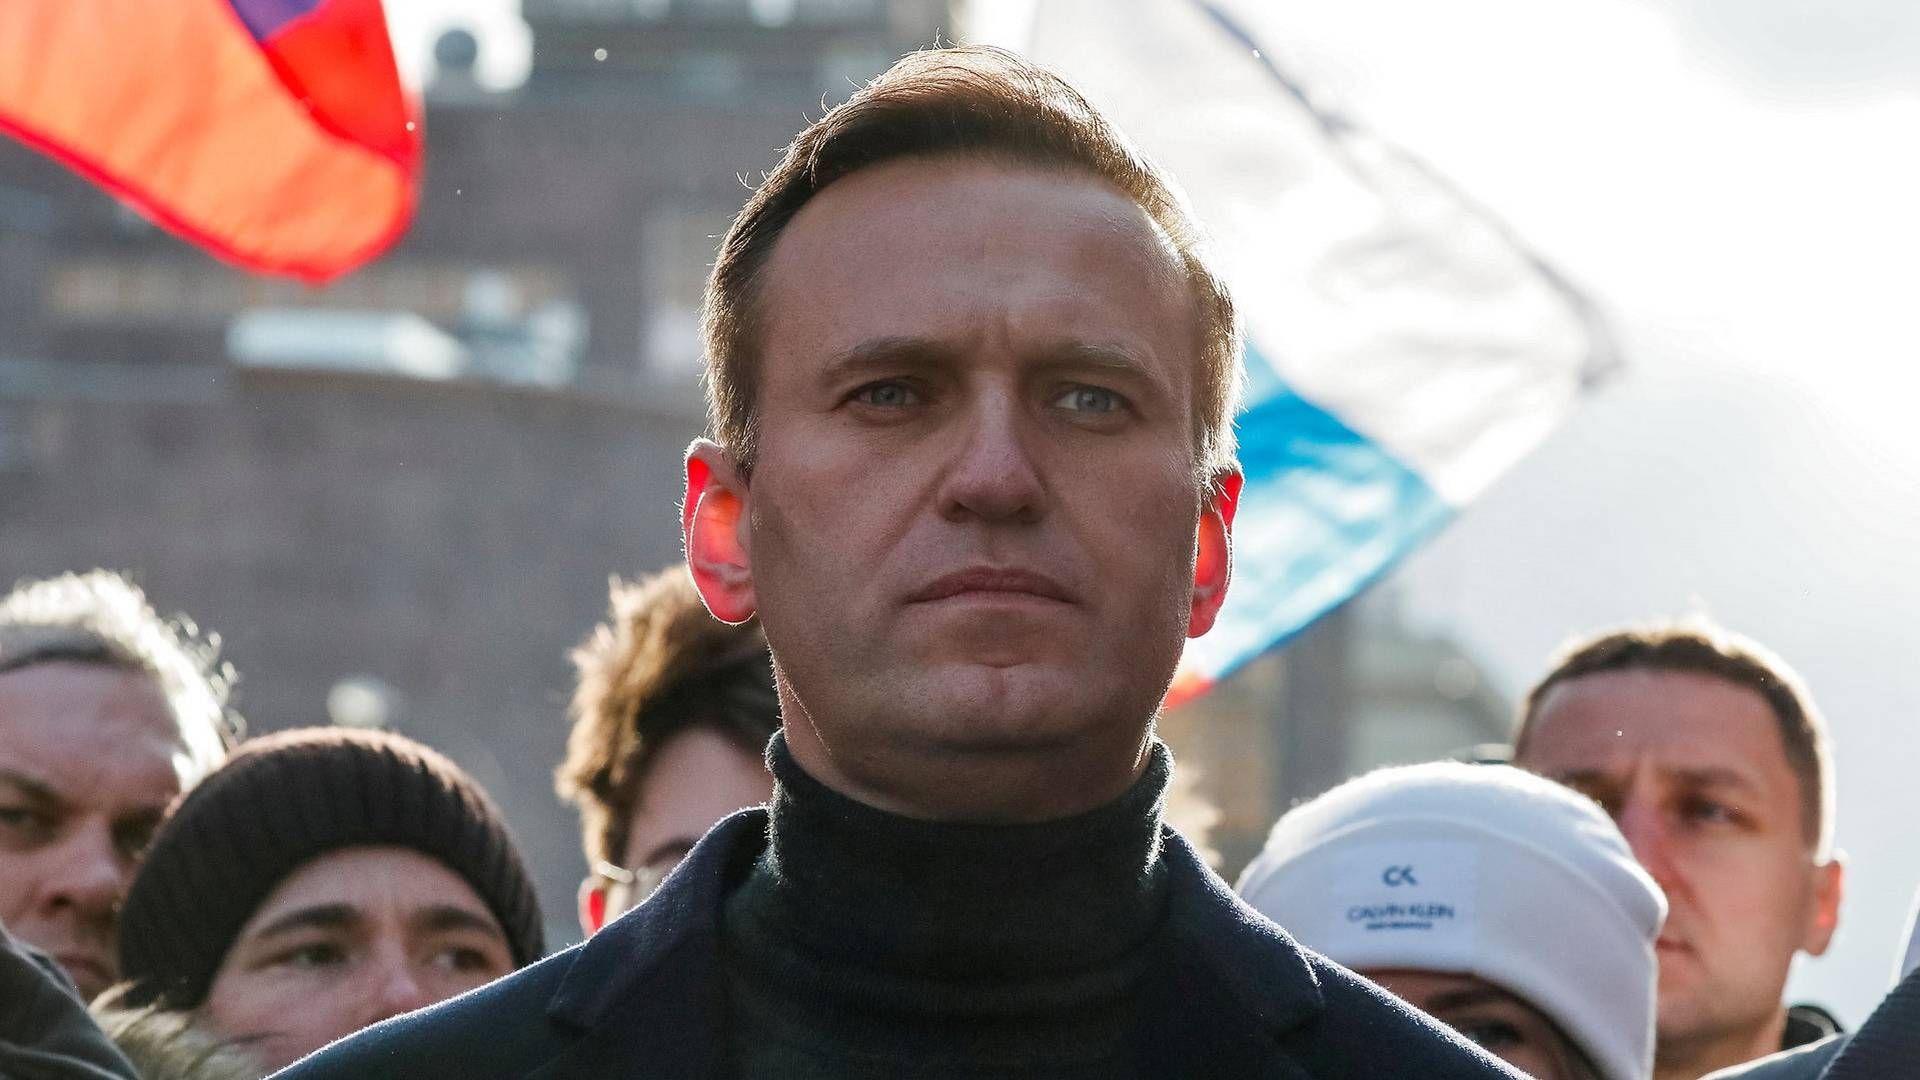 Komanda 29's leder, Ivan Pavlov, har forsvaret Aleksej Navalnyjs (på billedet) antikorruptionsstiftelse FBK. | Foto: Shamil Zhumatov/Reuters/Ritzau Scanpix